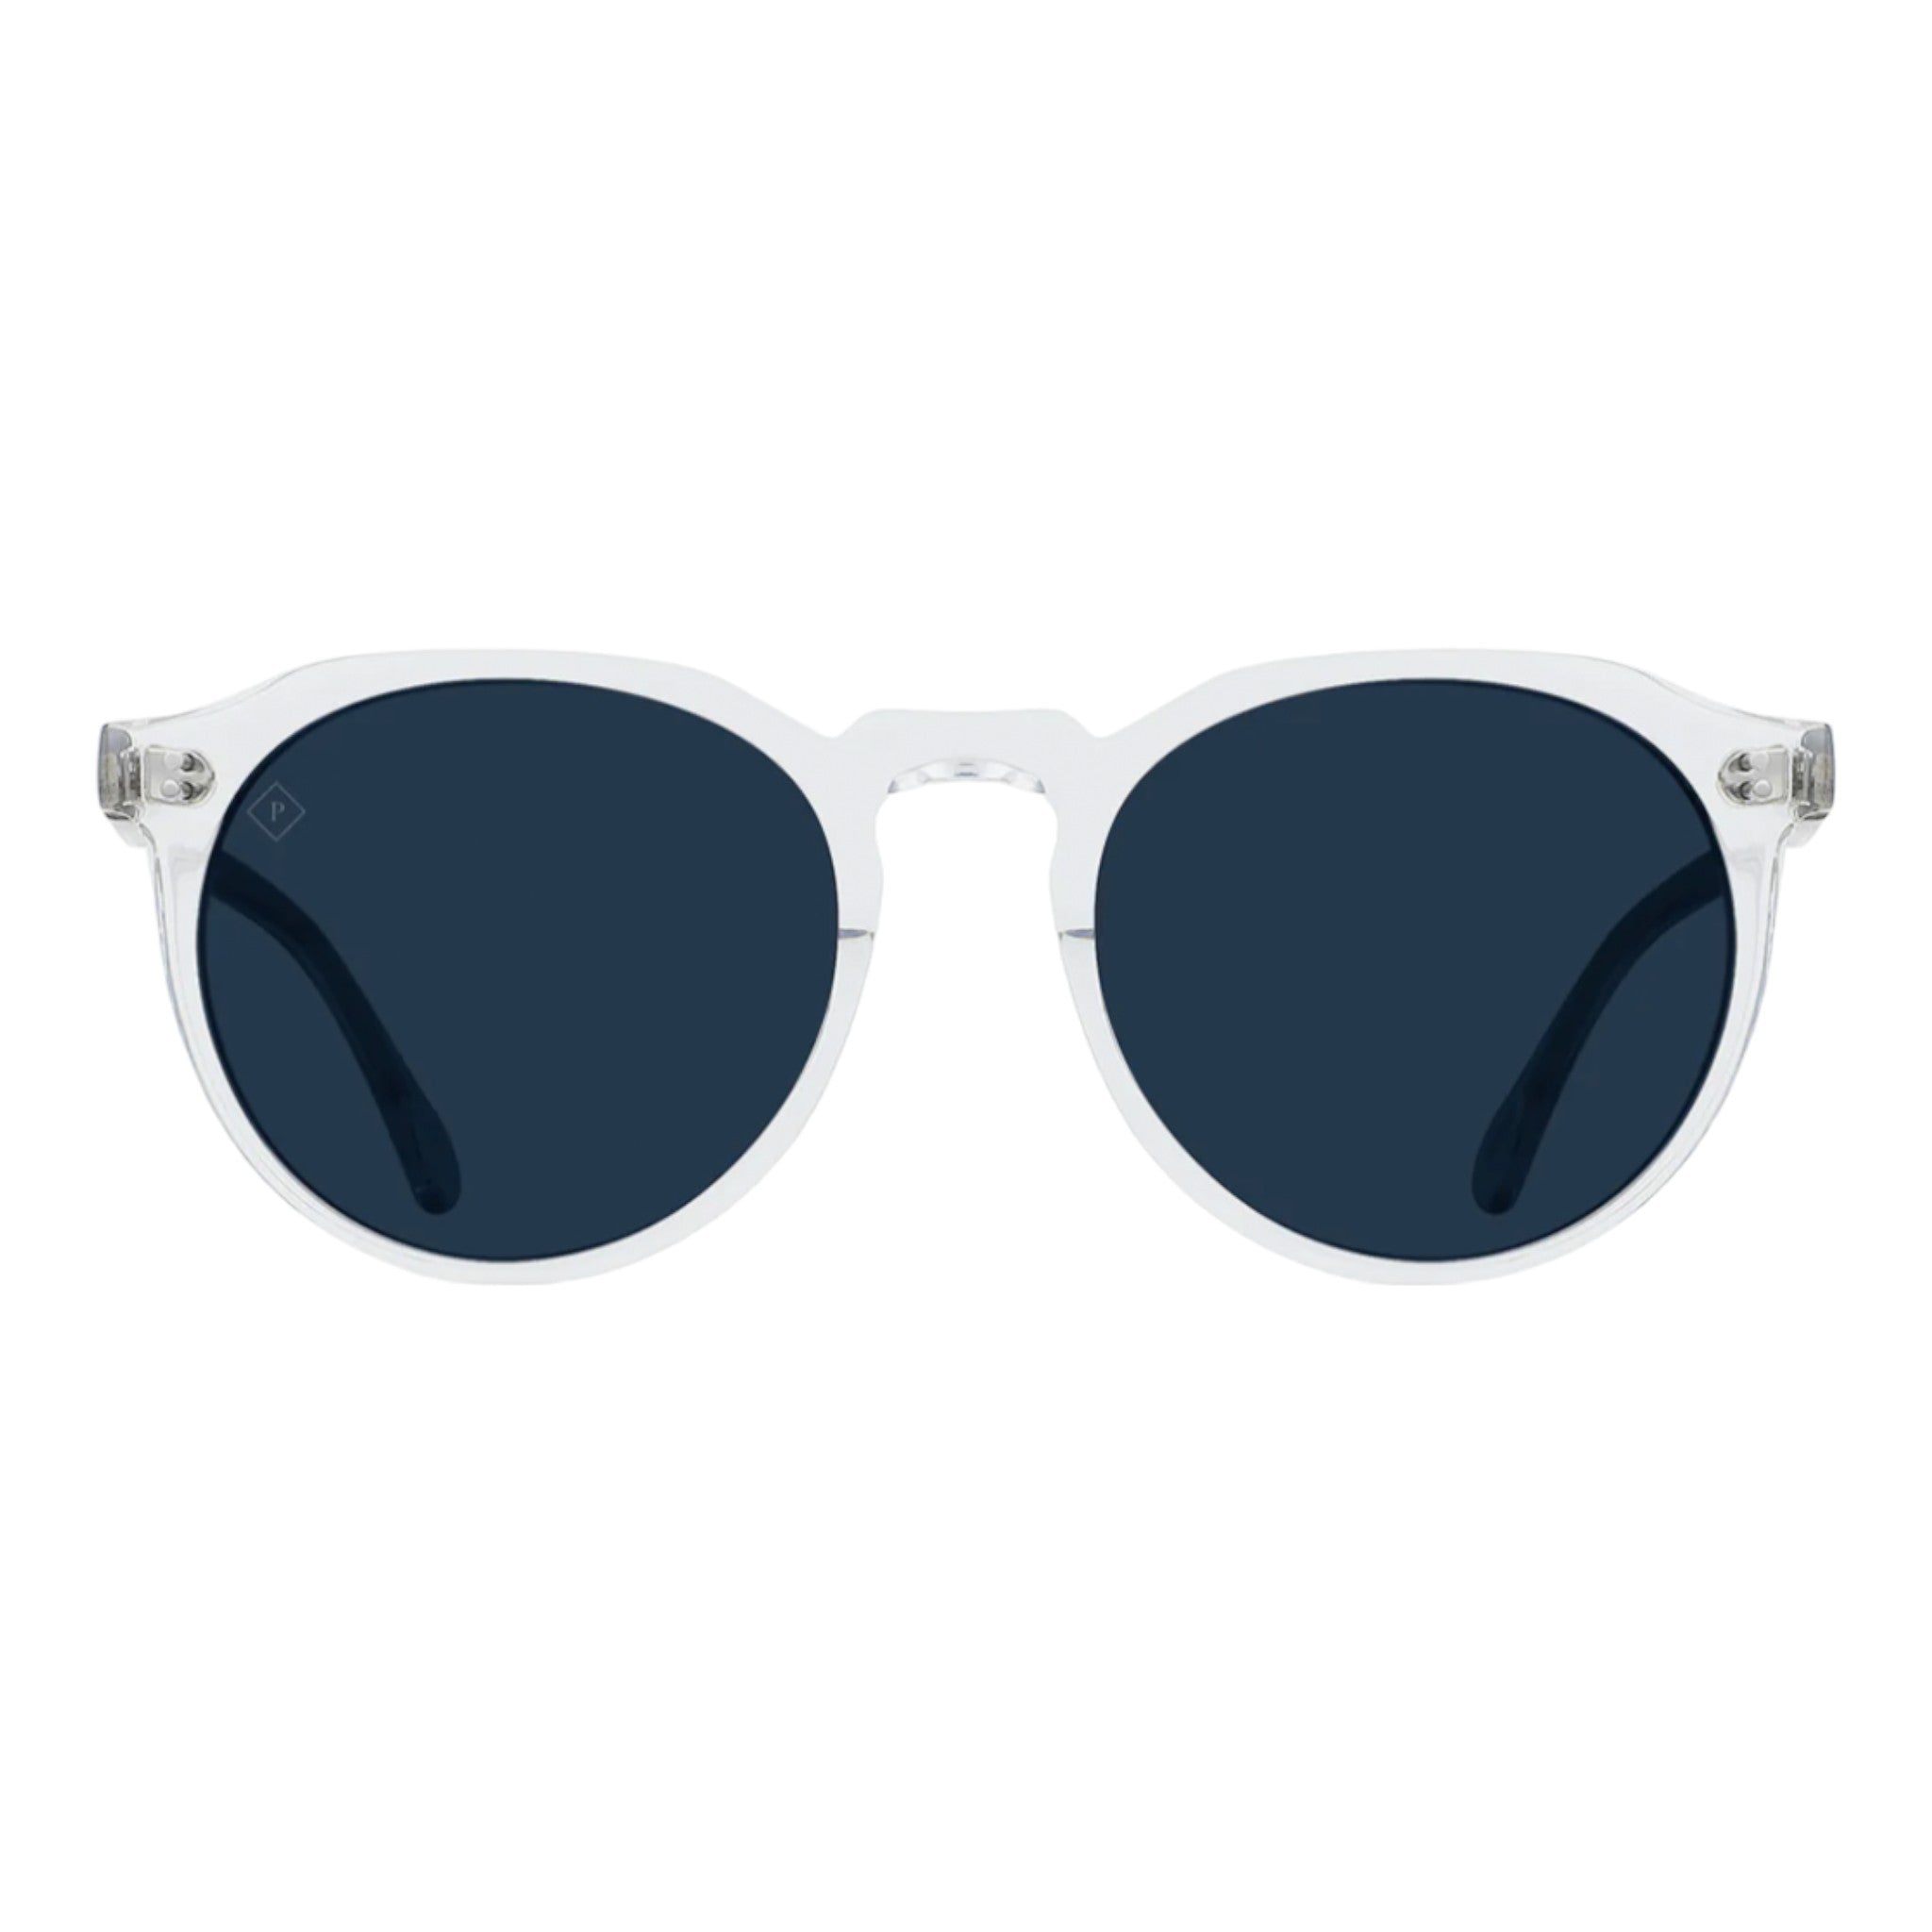 Raen - Remmy 52 Sunglasses - Crystal Clear / Polarized Blue Smoke